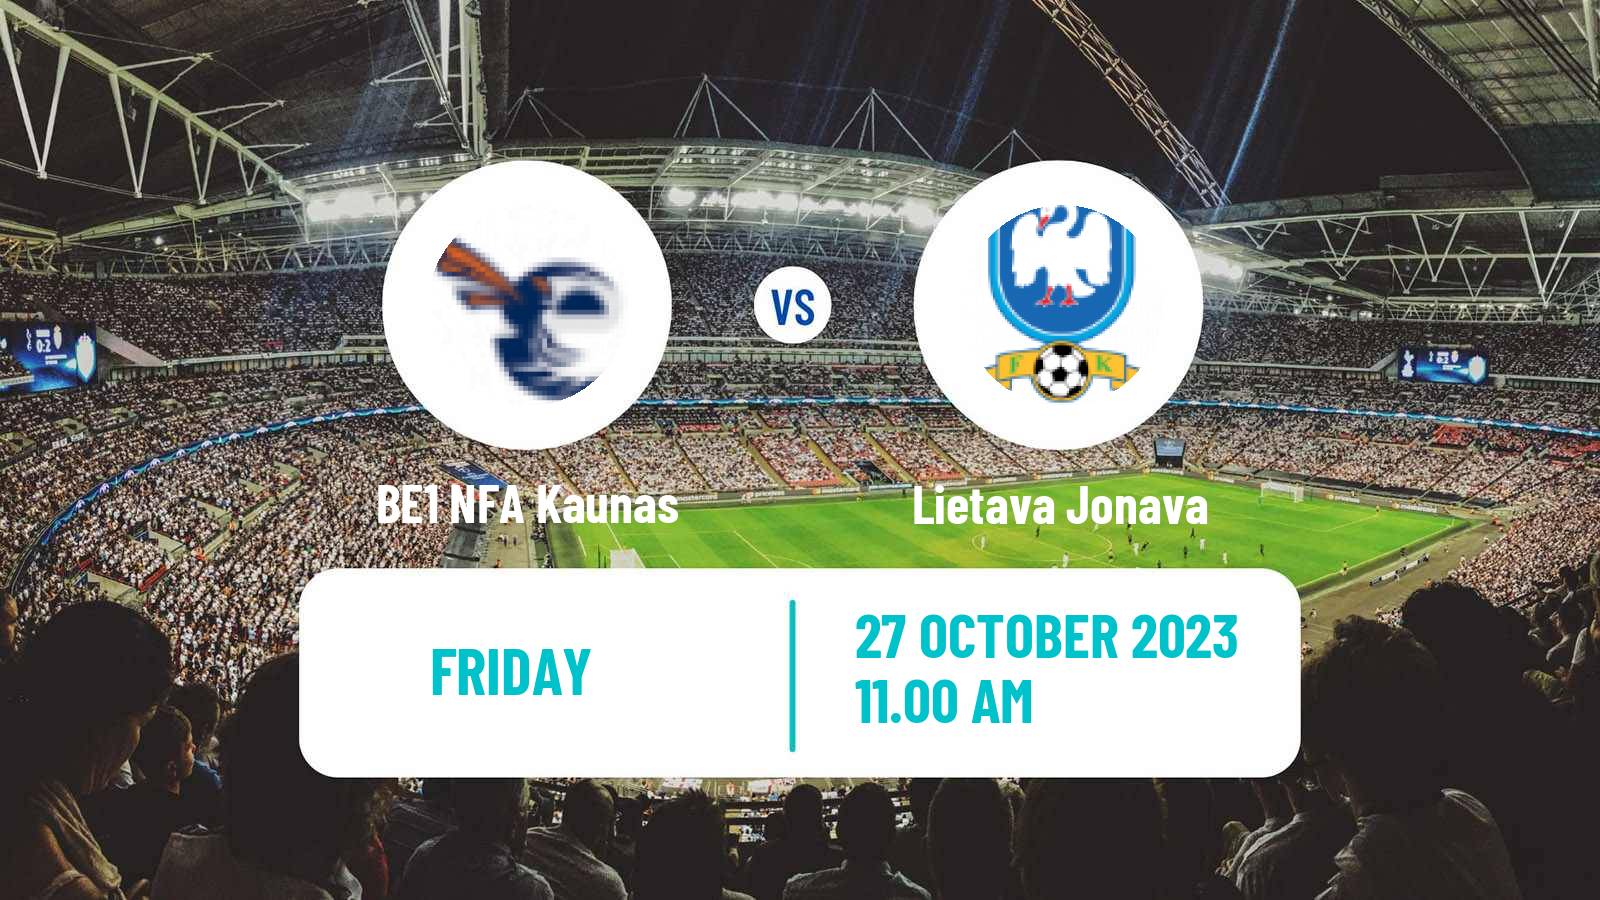 Soccer Lithuanian Division 2 BE1 NFA Kaunas - Lietava Jonava